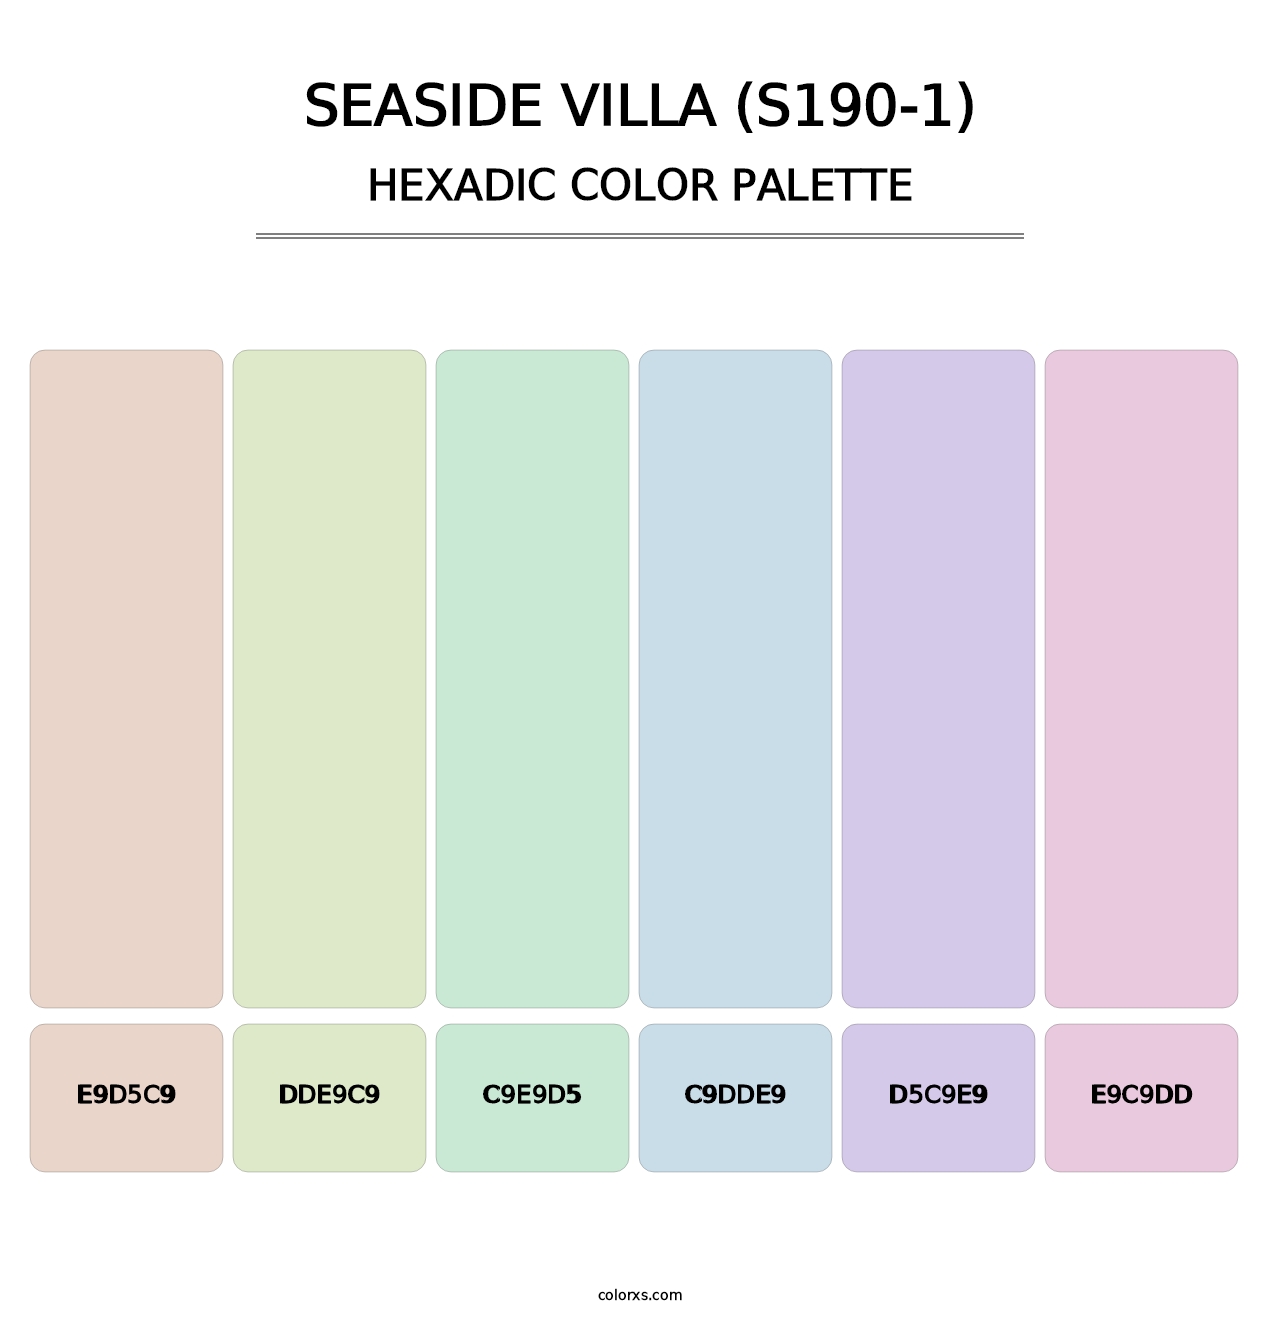 Seaside Villa (S190-1) - Hexadic Color Palette